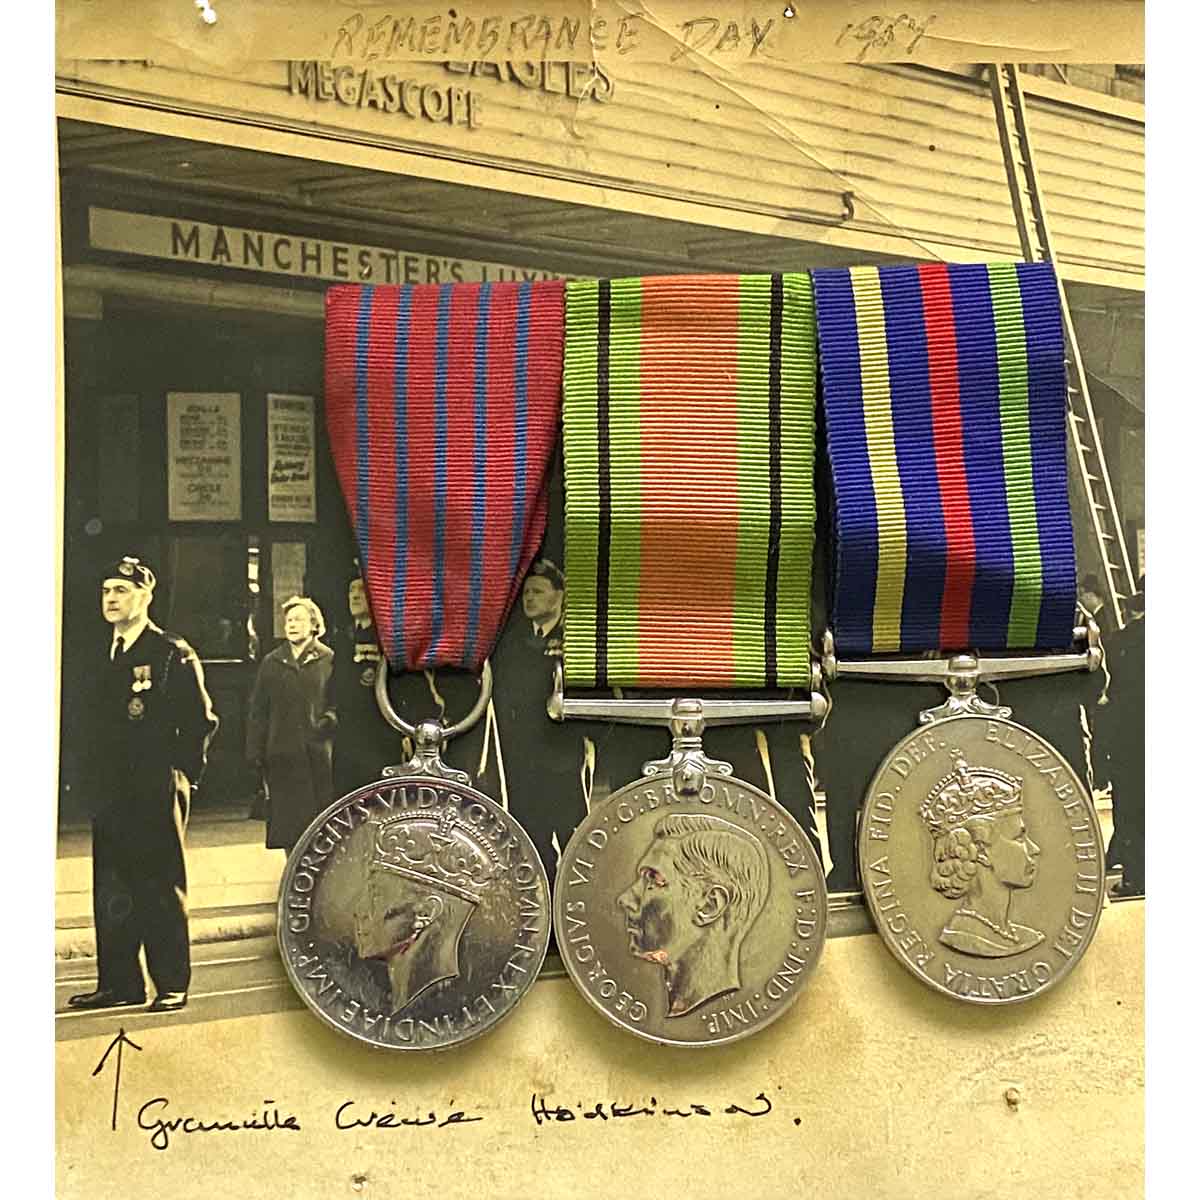 George Medal, Manchester Blitz 1